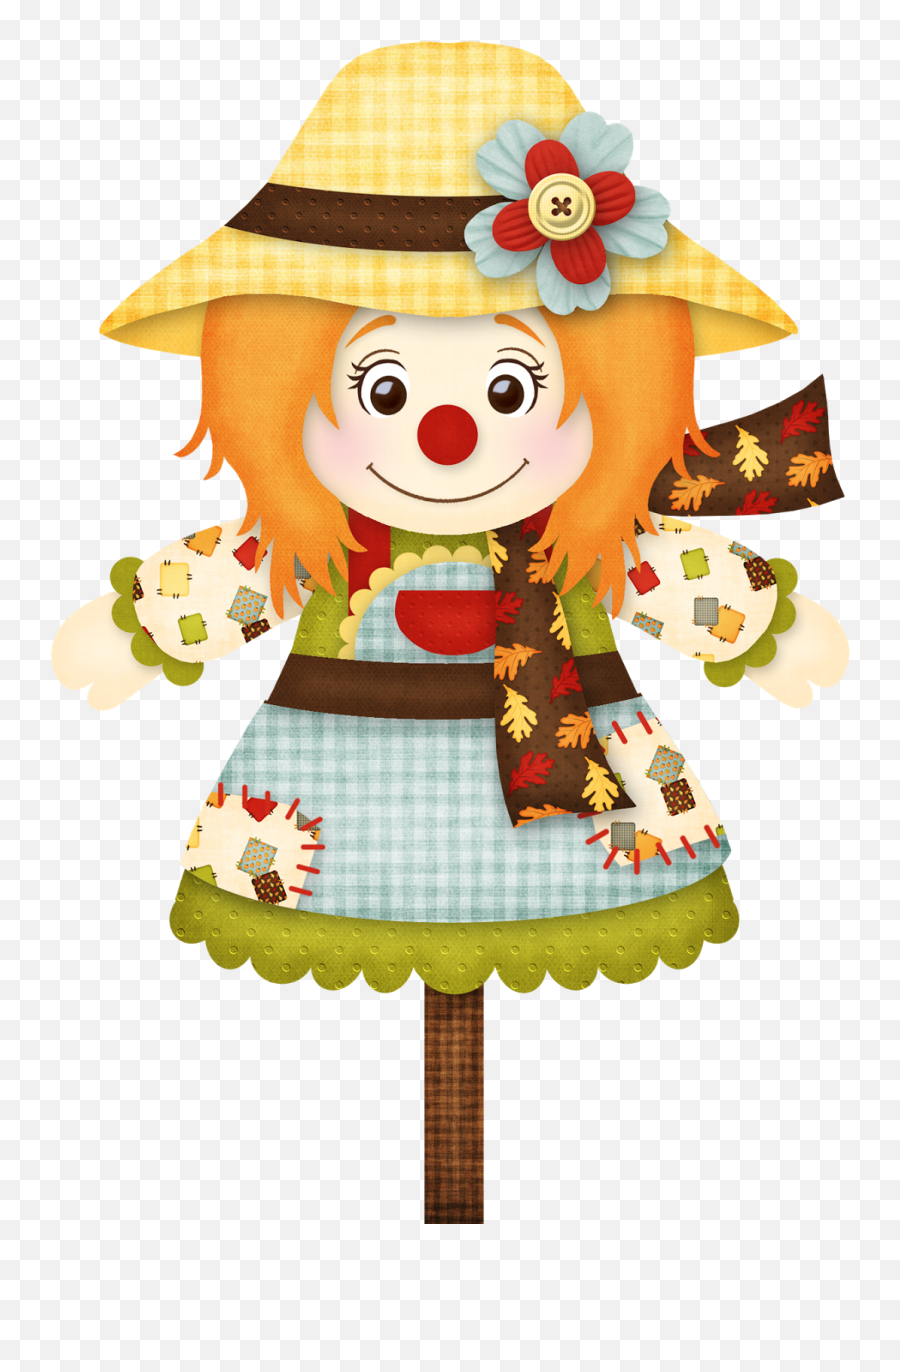 Images For Cute Pumpkin Png Clipart - Happy Thanksgiving,Cute Pumpkin Png